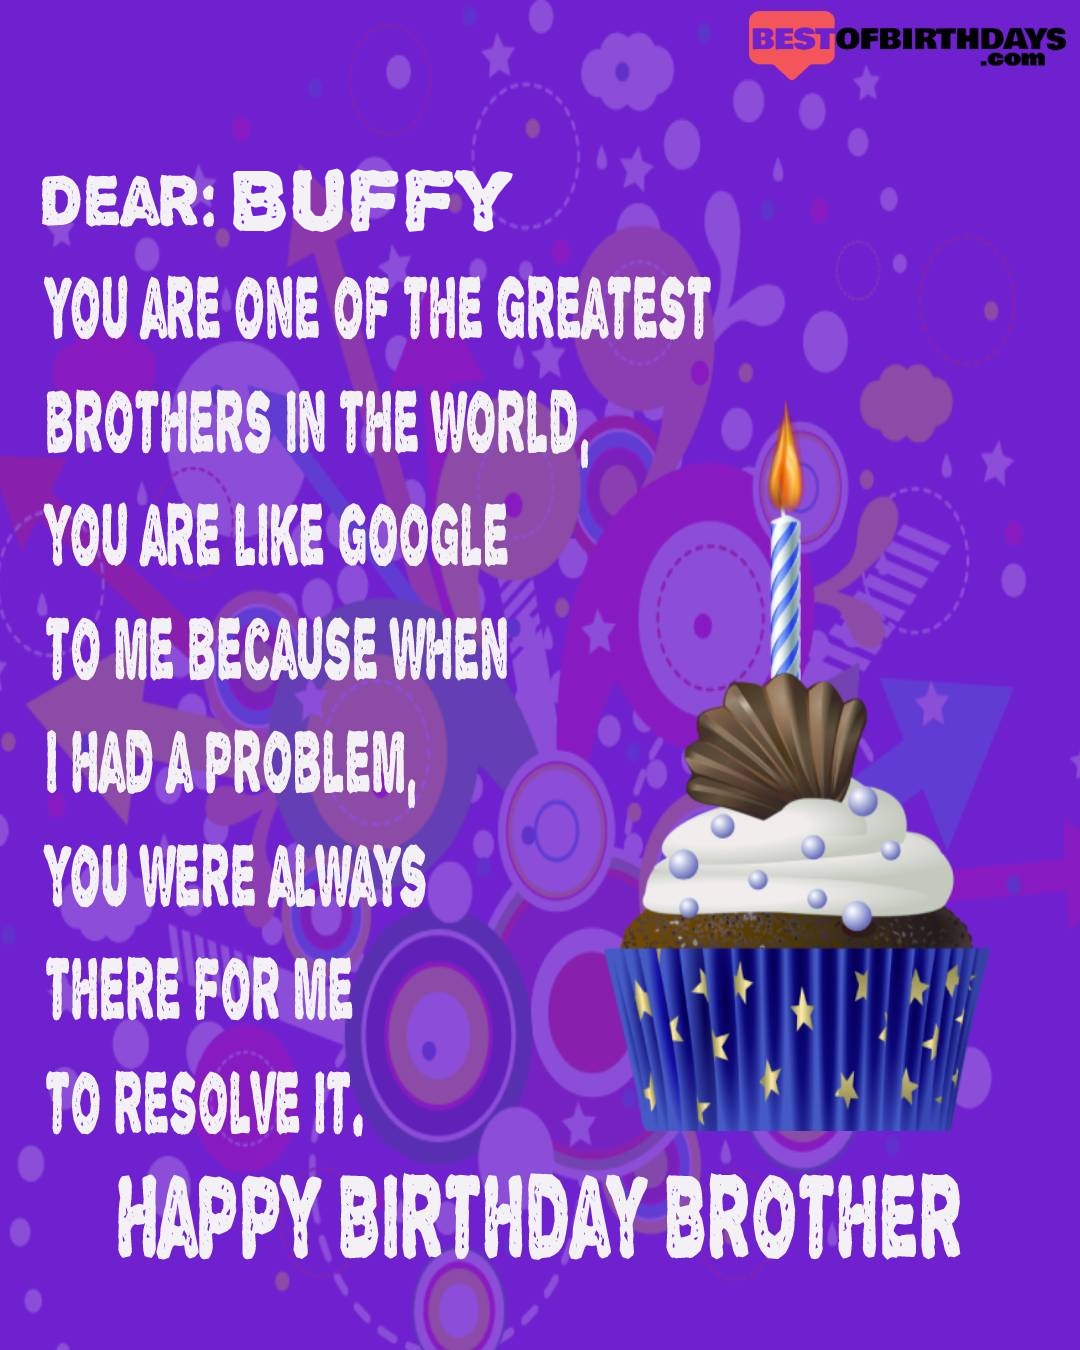 Happy birthday buffy bhai brother bro